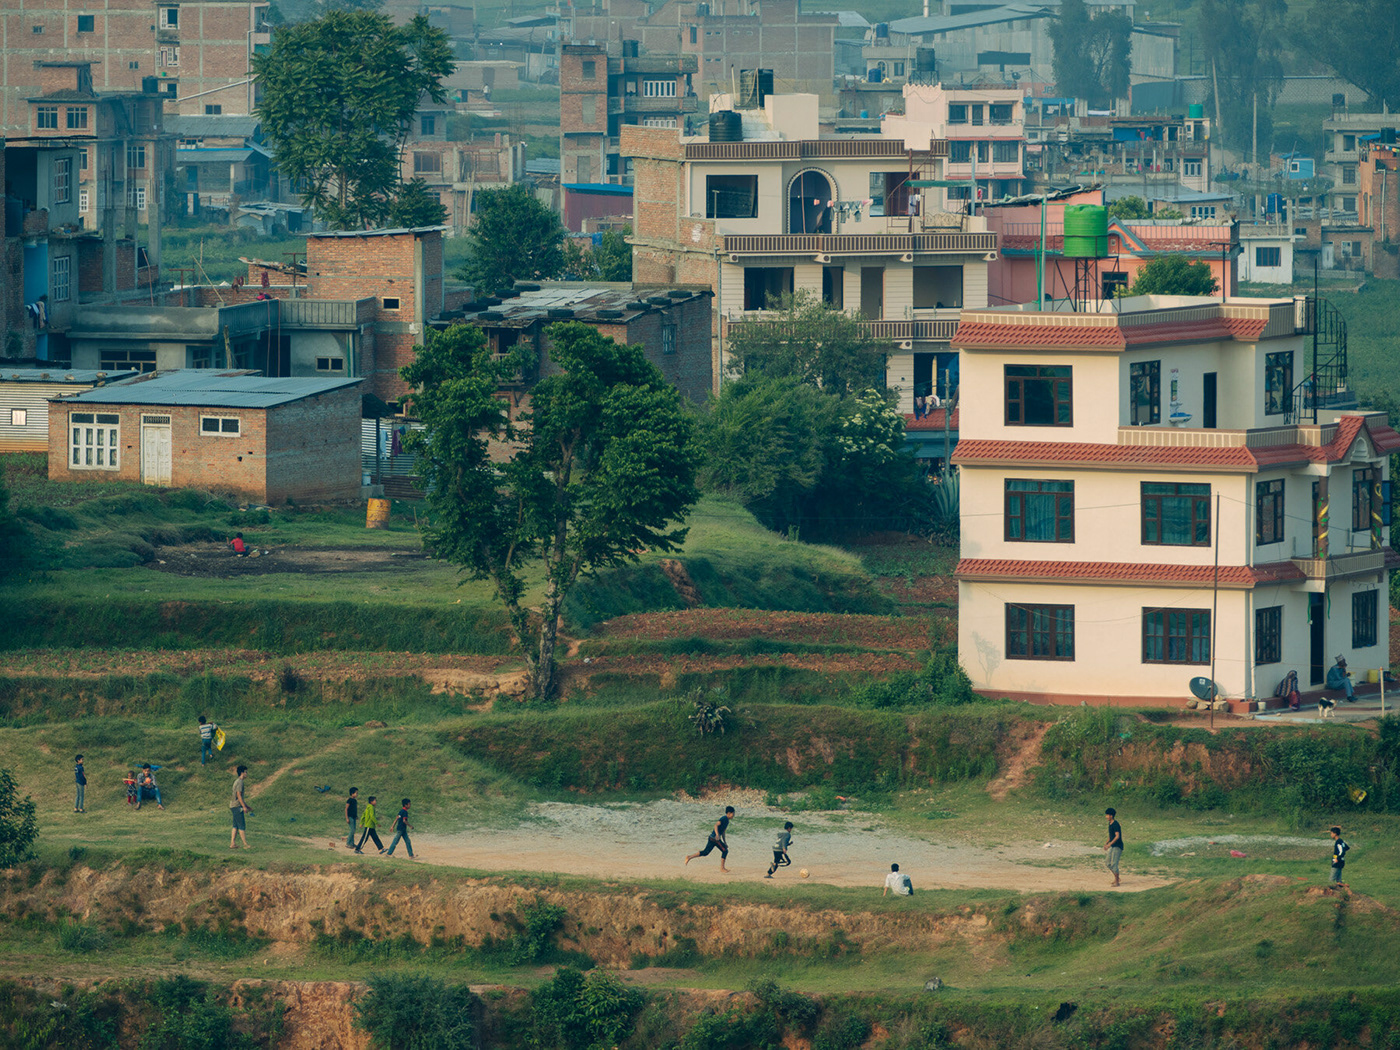 asia Documentary  India nepal Photography  Travel